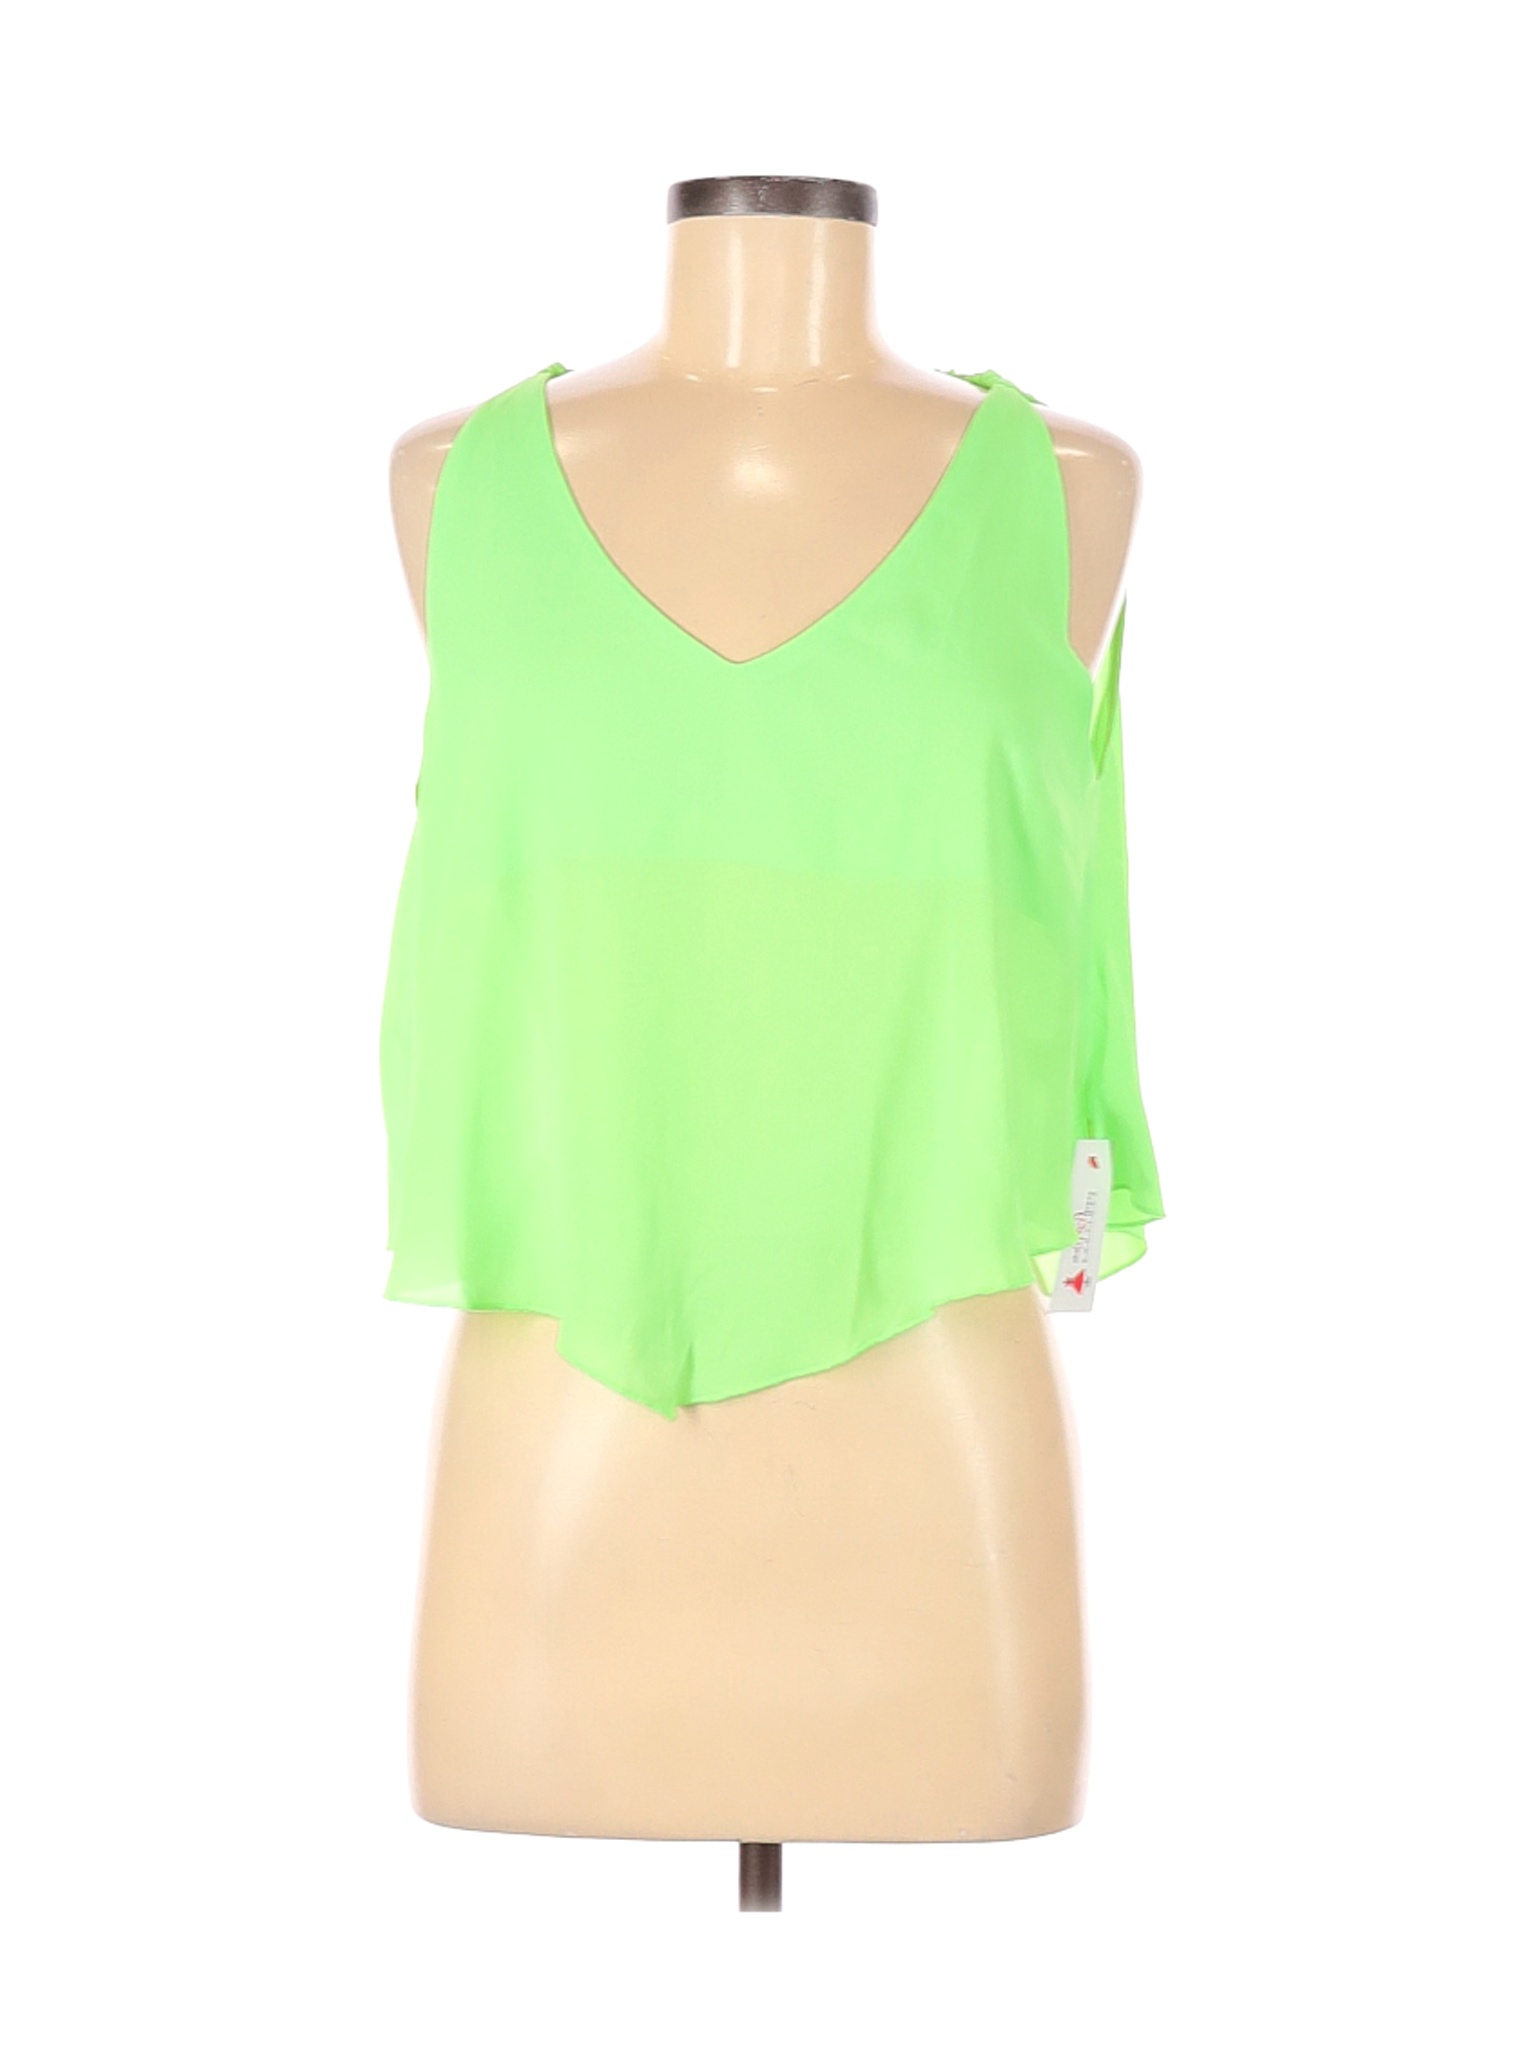 NWT Fun2Fun Women Green Sleeveless Blouse M | eBay